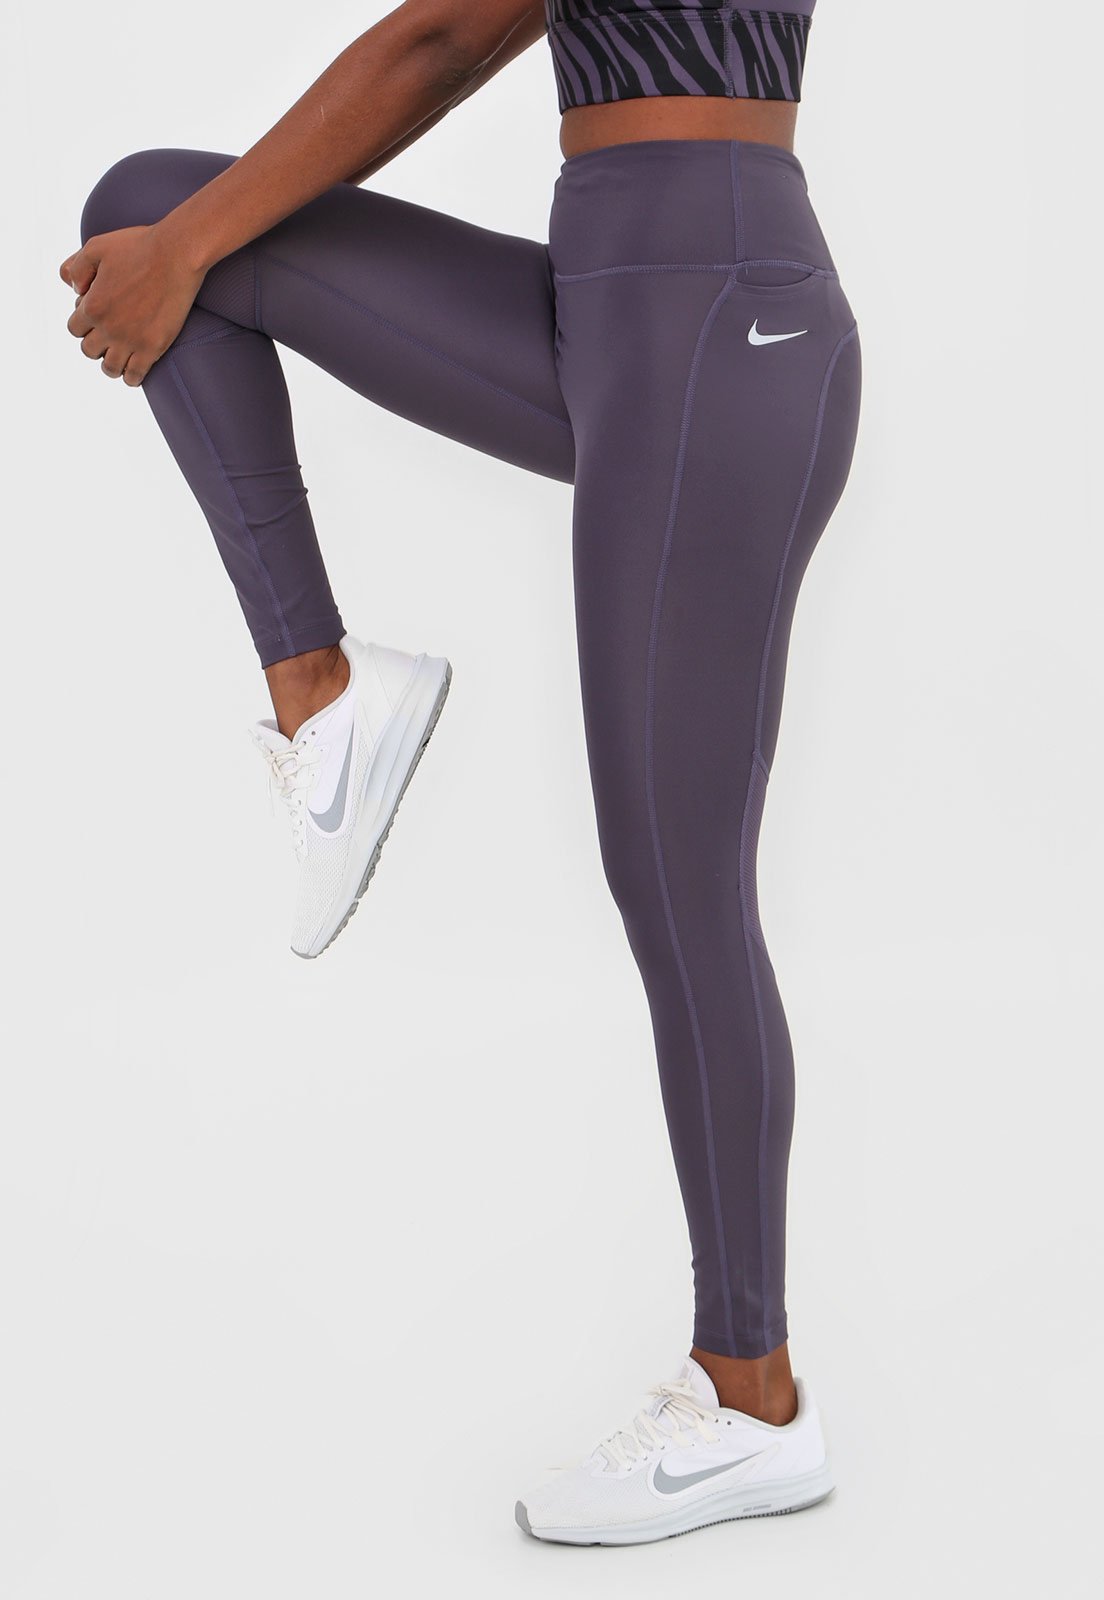 Legging Nike Epic Fast Tght Roxa - Compre Agora